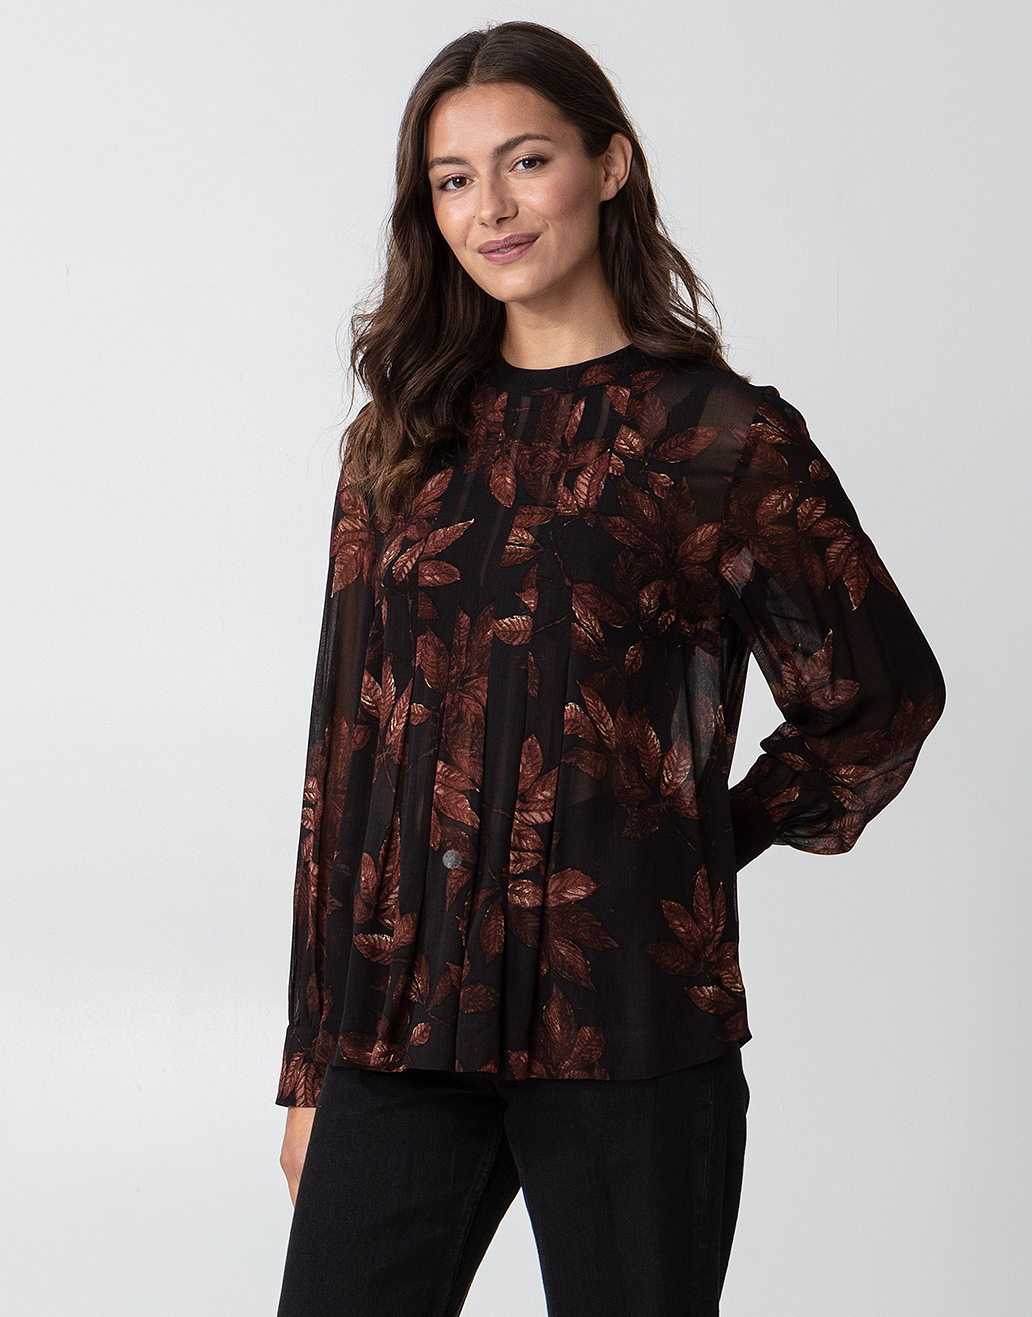 Translucent patterned blouse Image 0